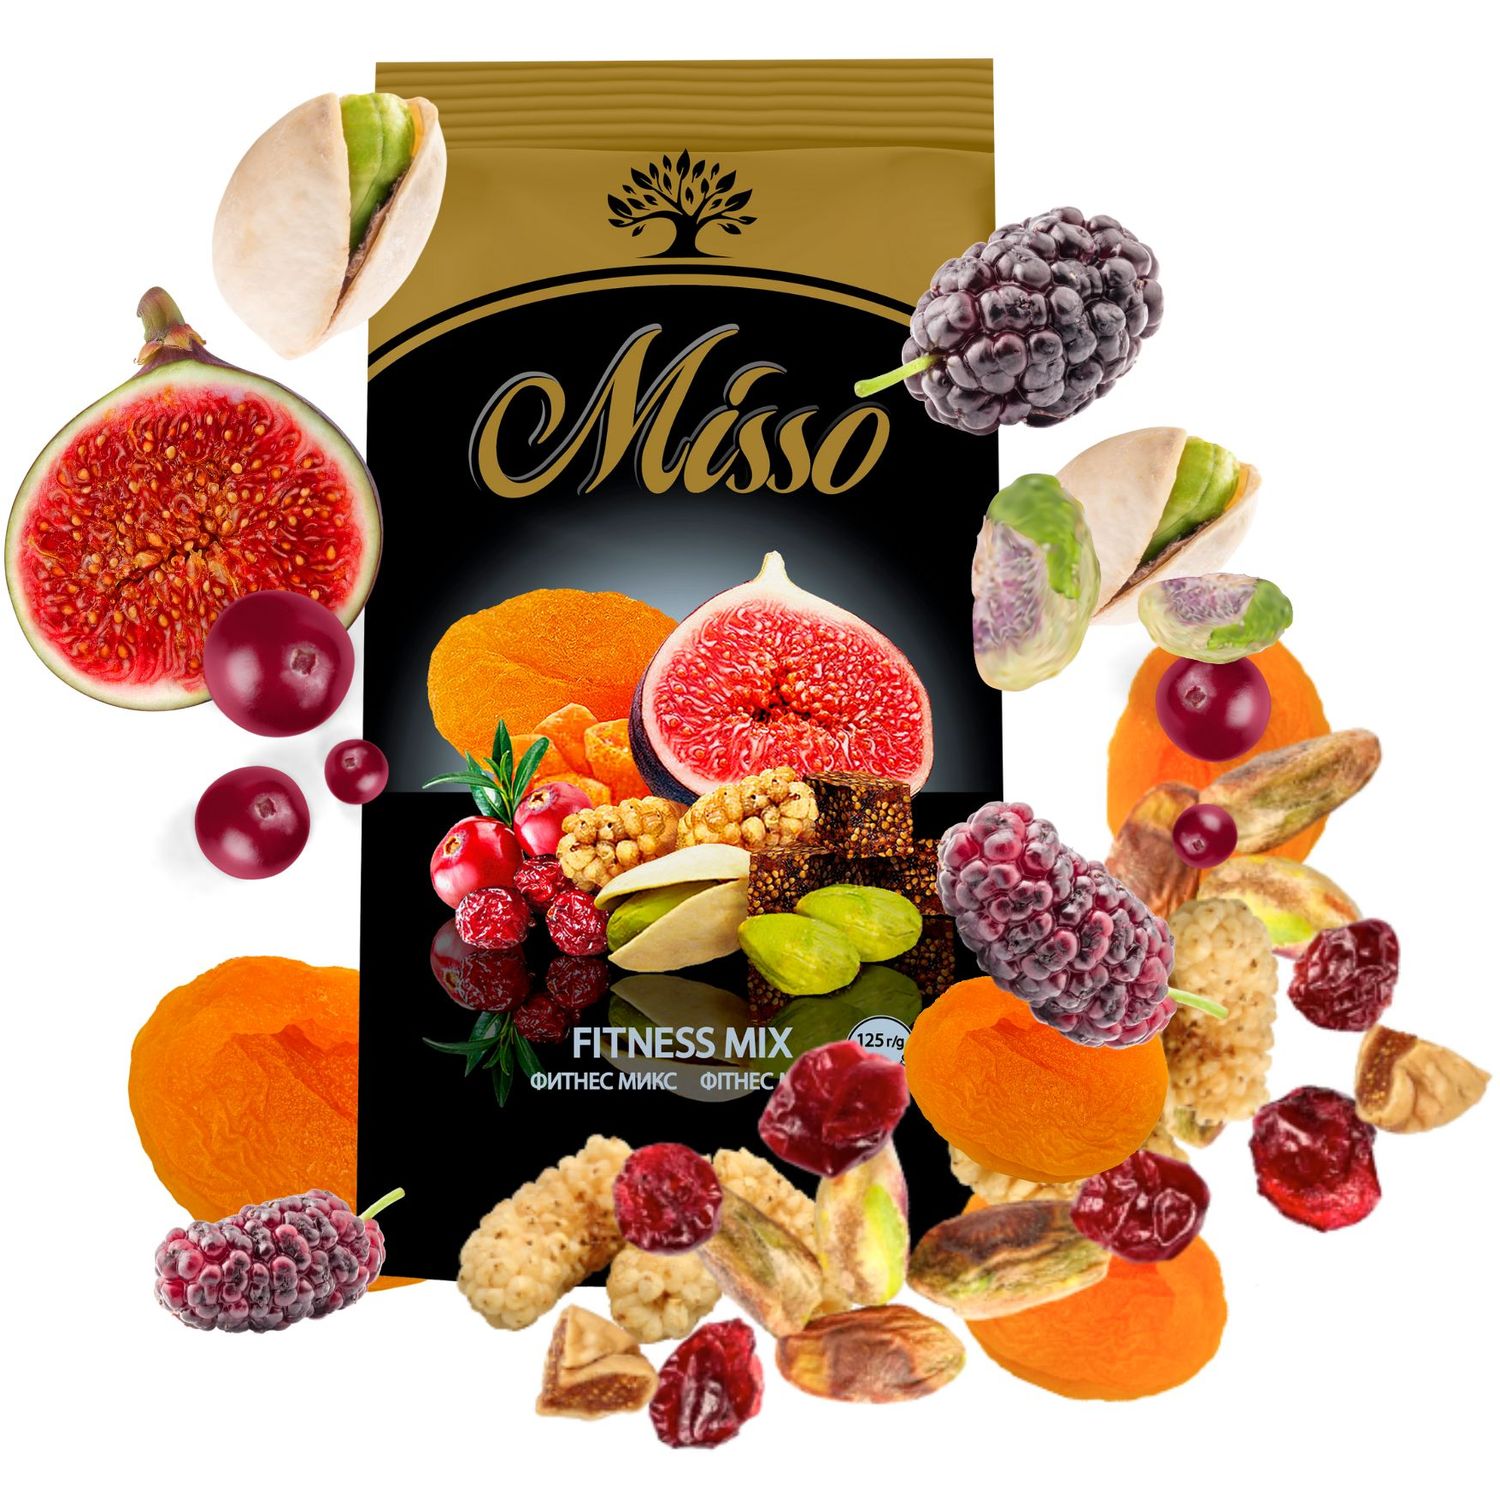 Ассорти сушеных ягод и ядер фисташки Misso Fitness Mix 125 г - фото 2